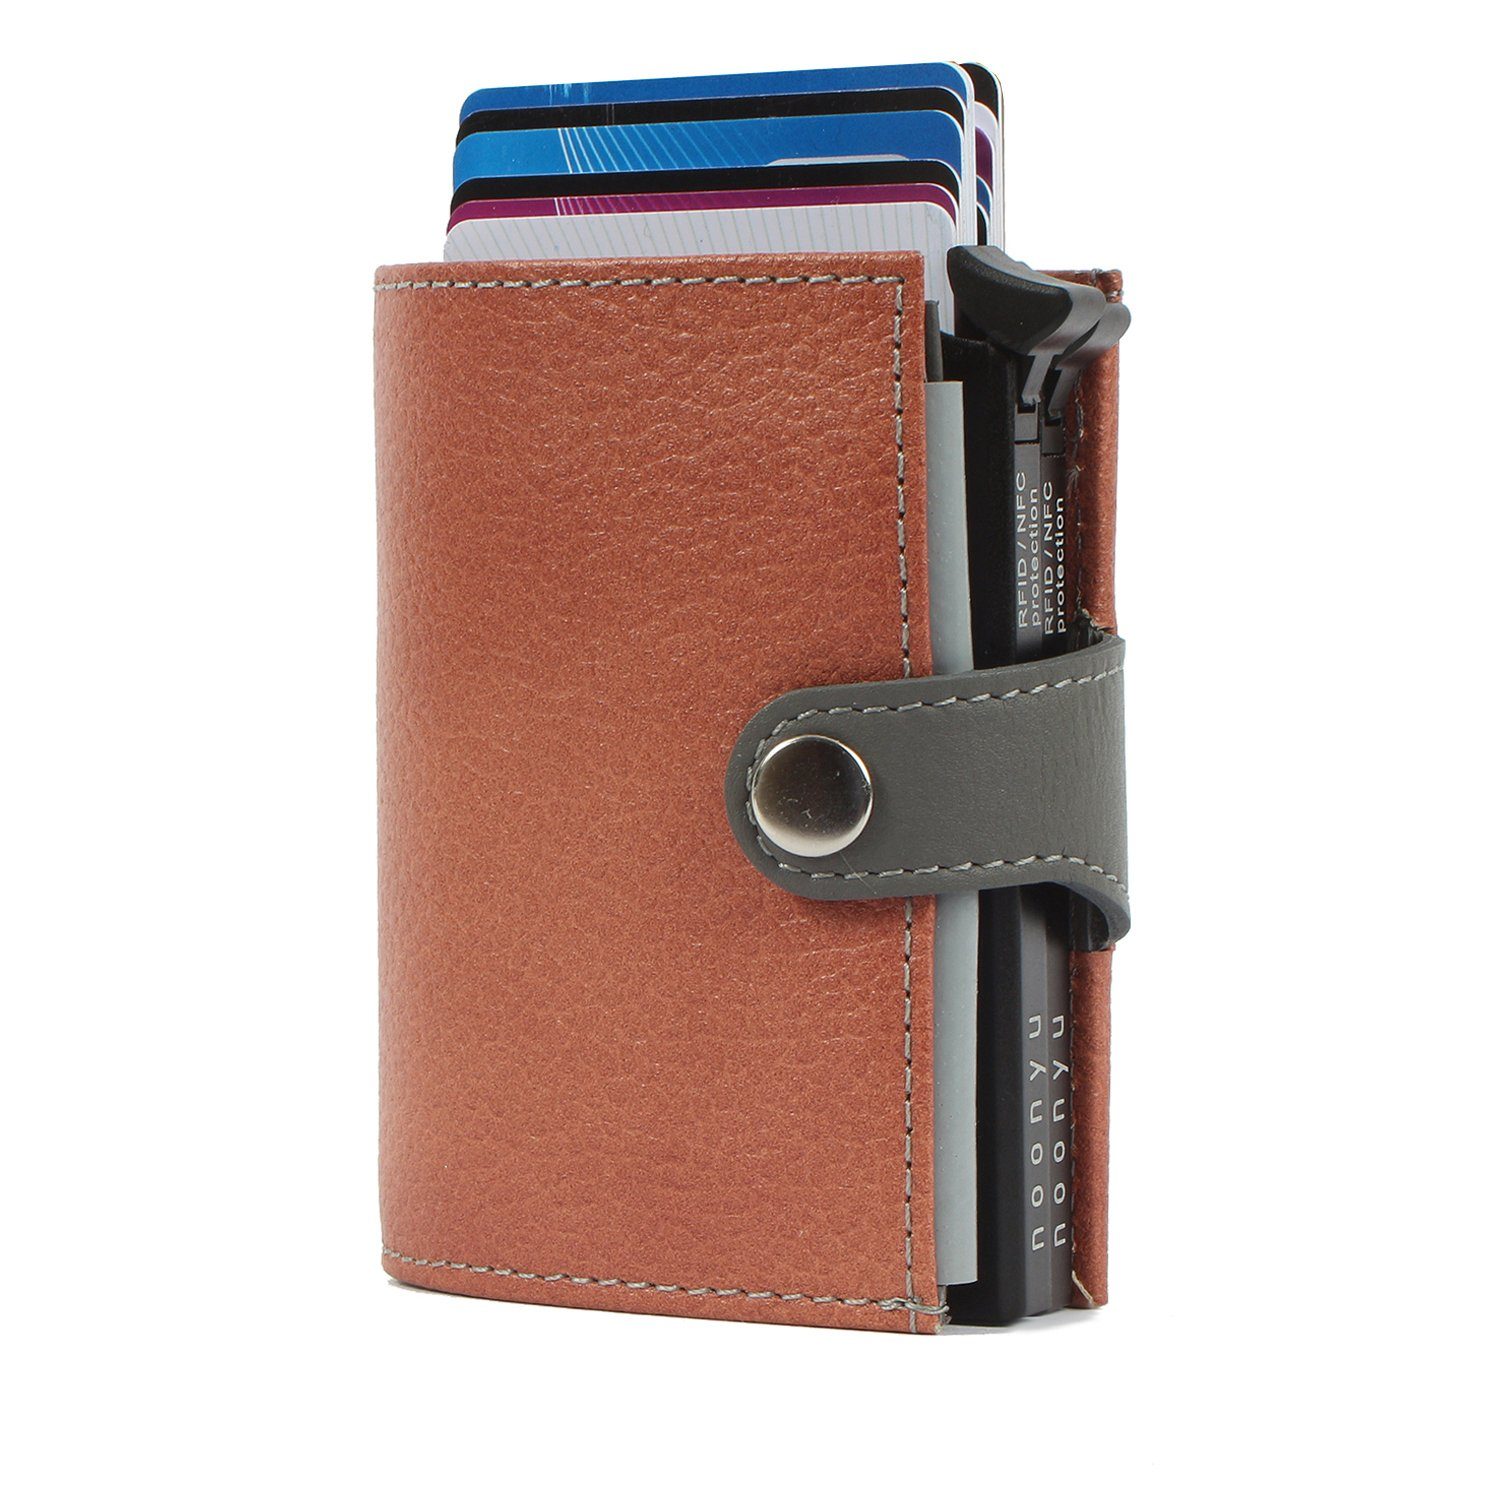 Margelisch Mini Geldbörse noonyu double aus Leder Kreditkartenbörse Upcycling RFID leather, salmon